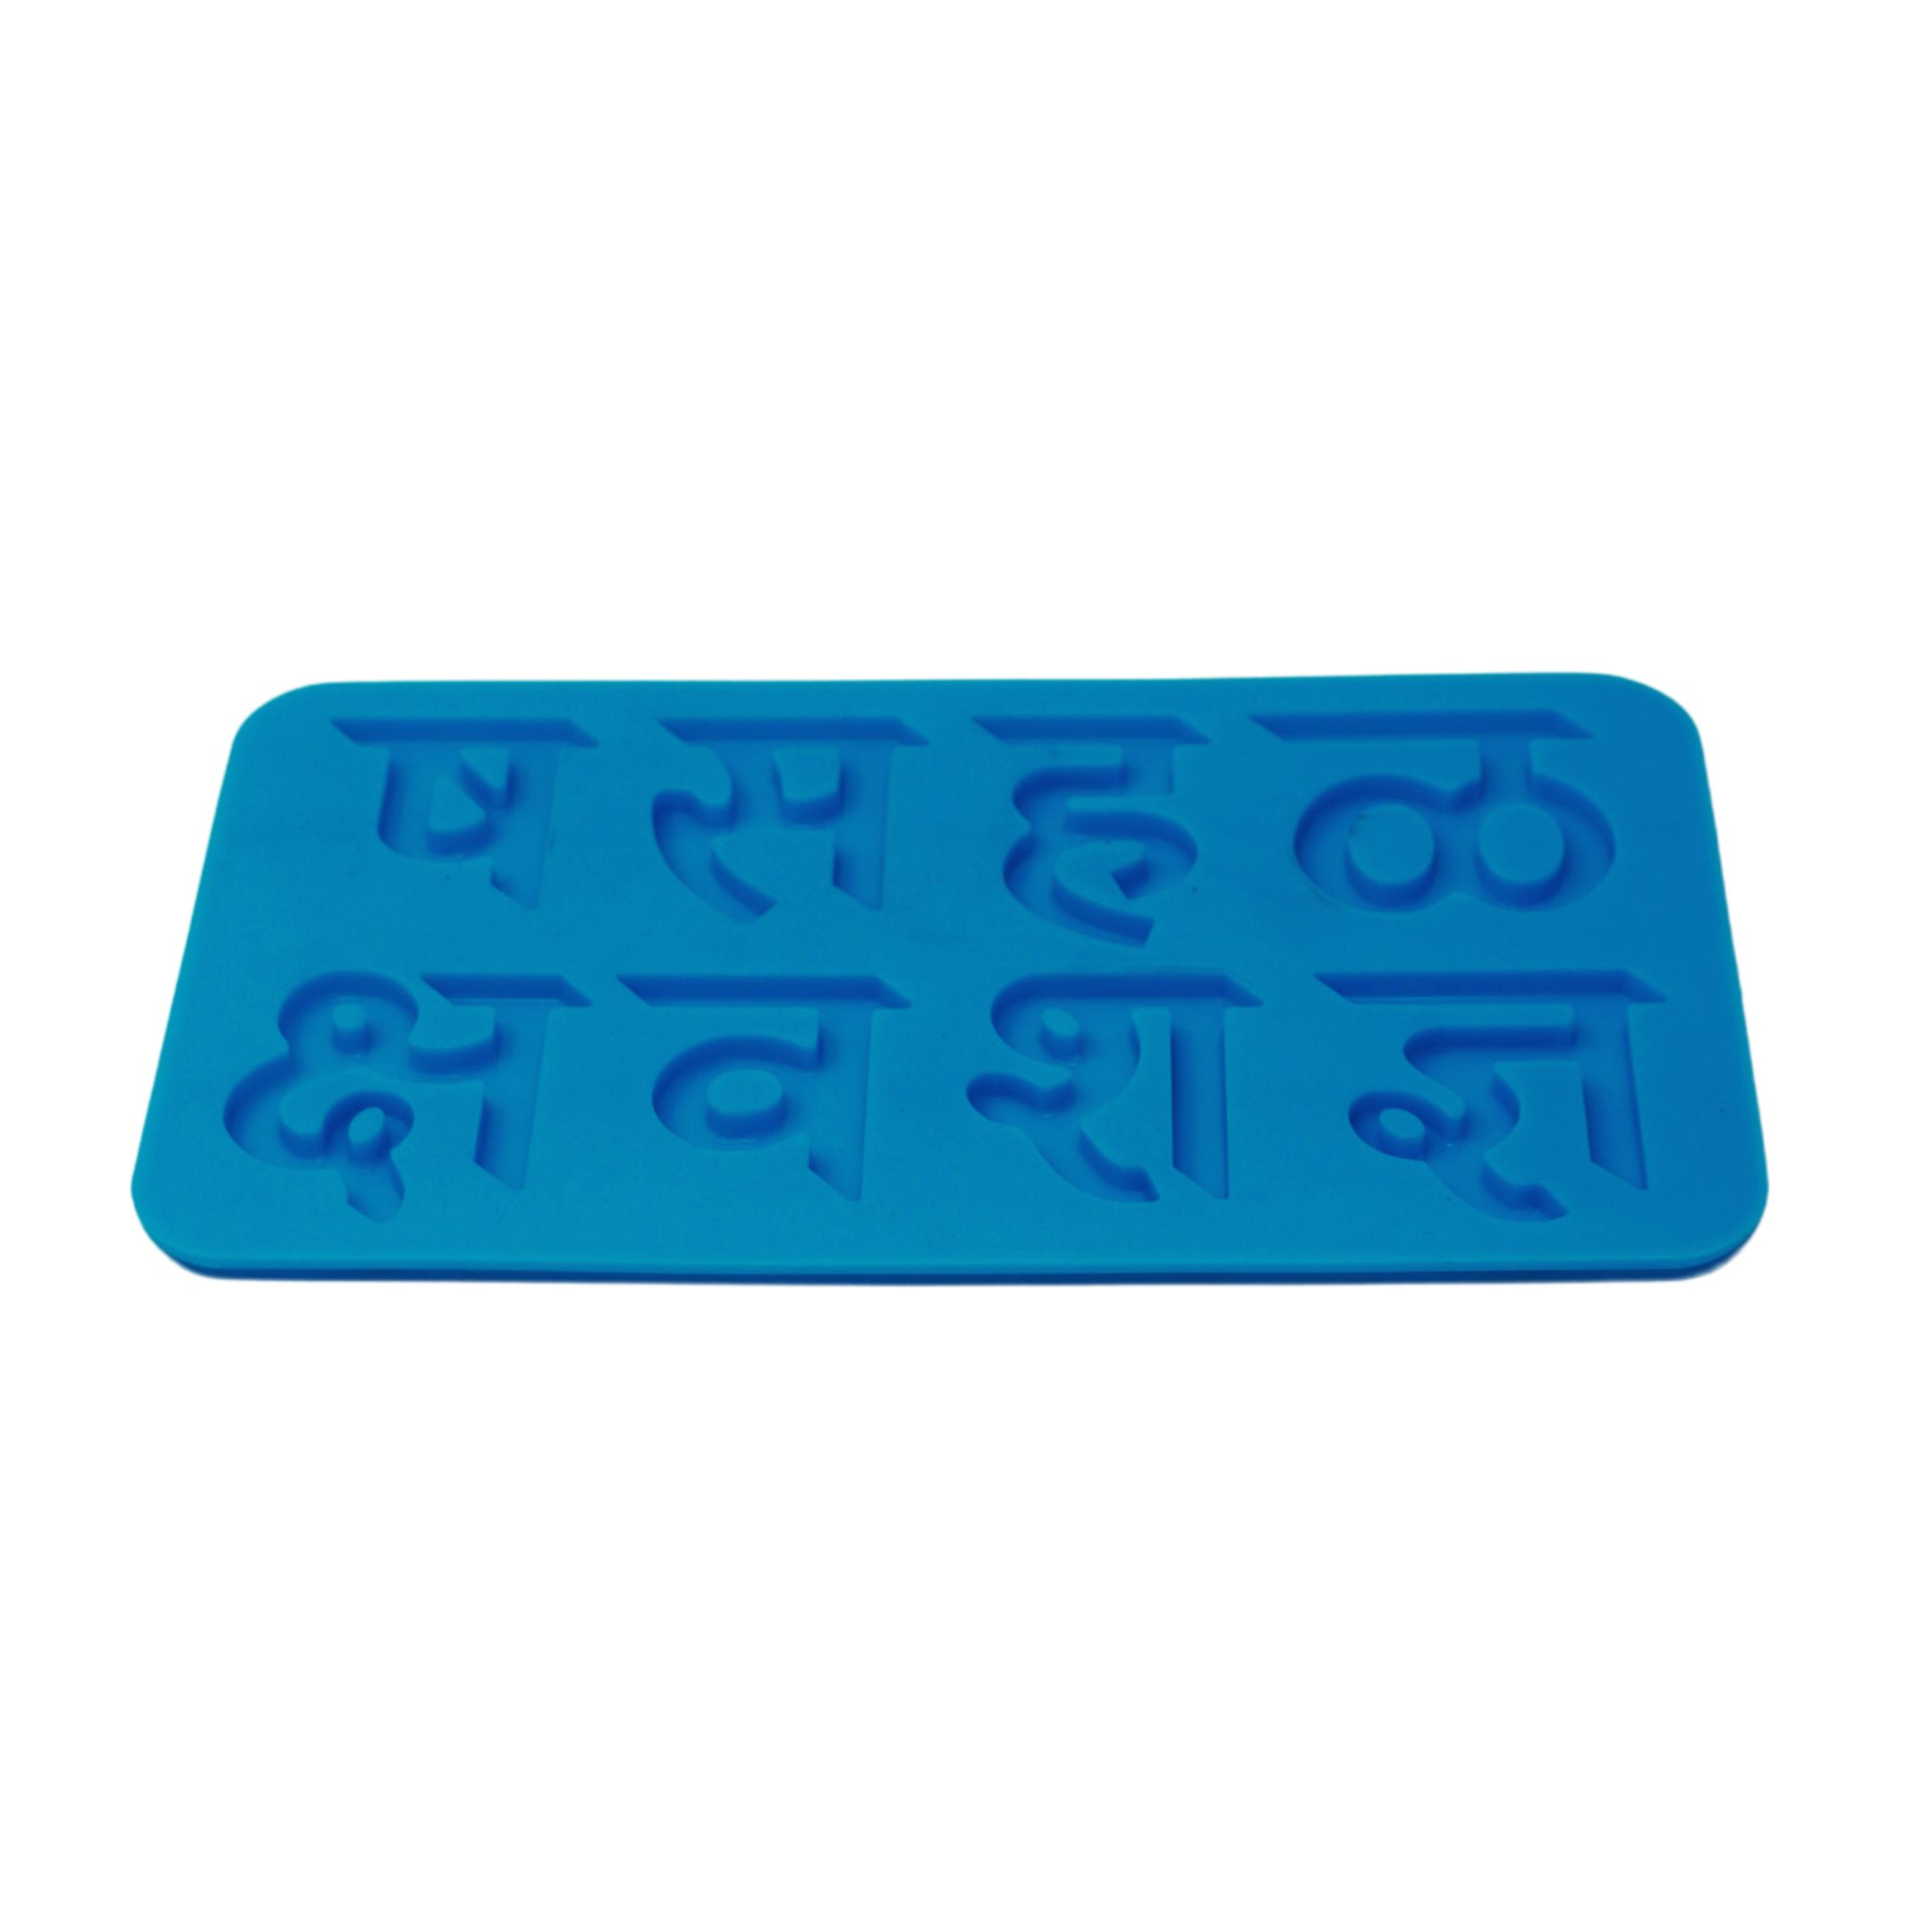 Hindi Alphabets Mould 5 - Huh - The Mould Story